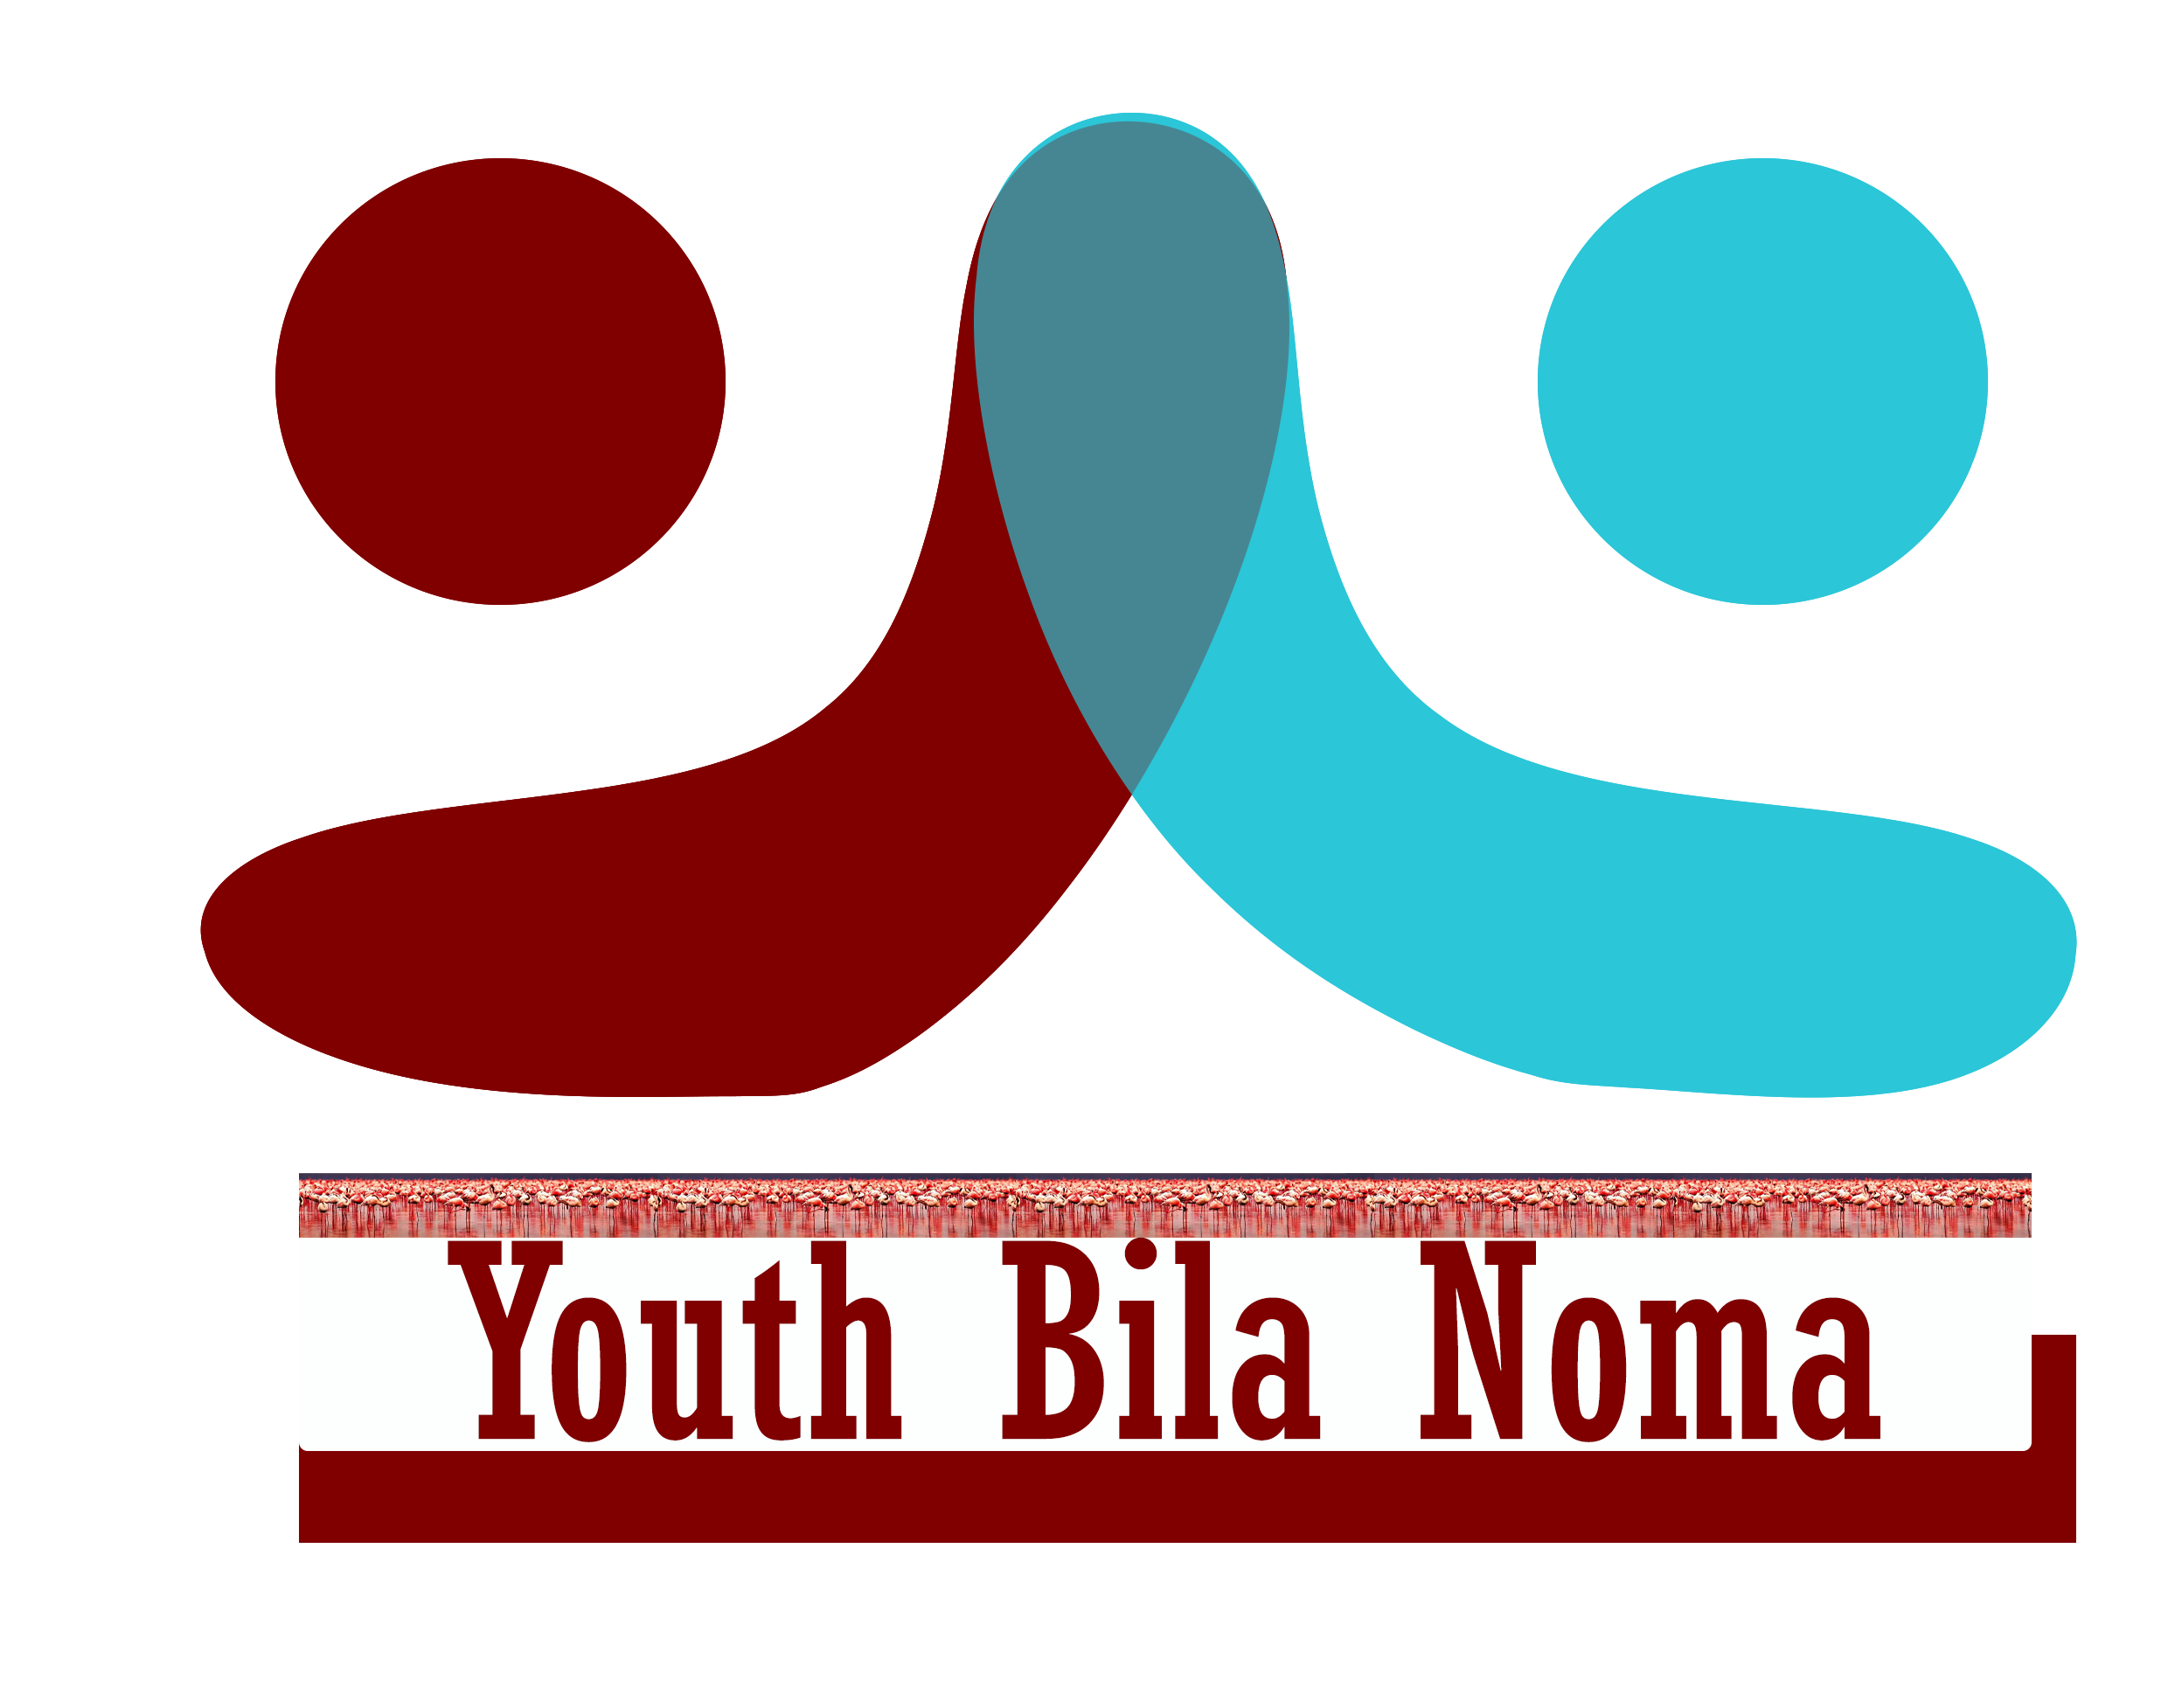 Youth Bila Noma